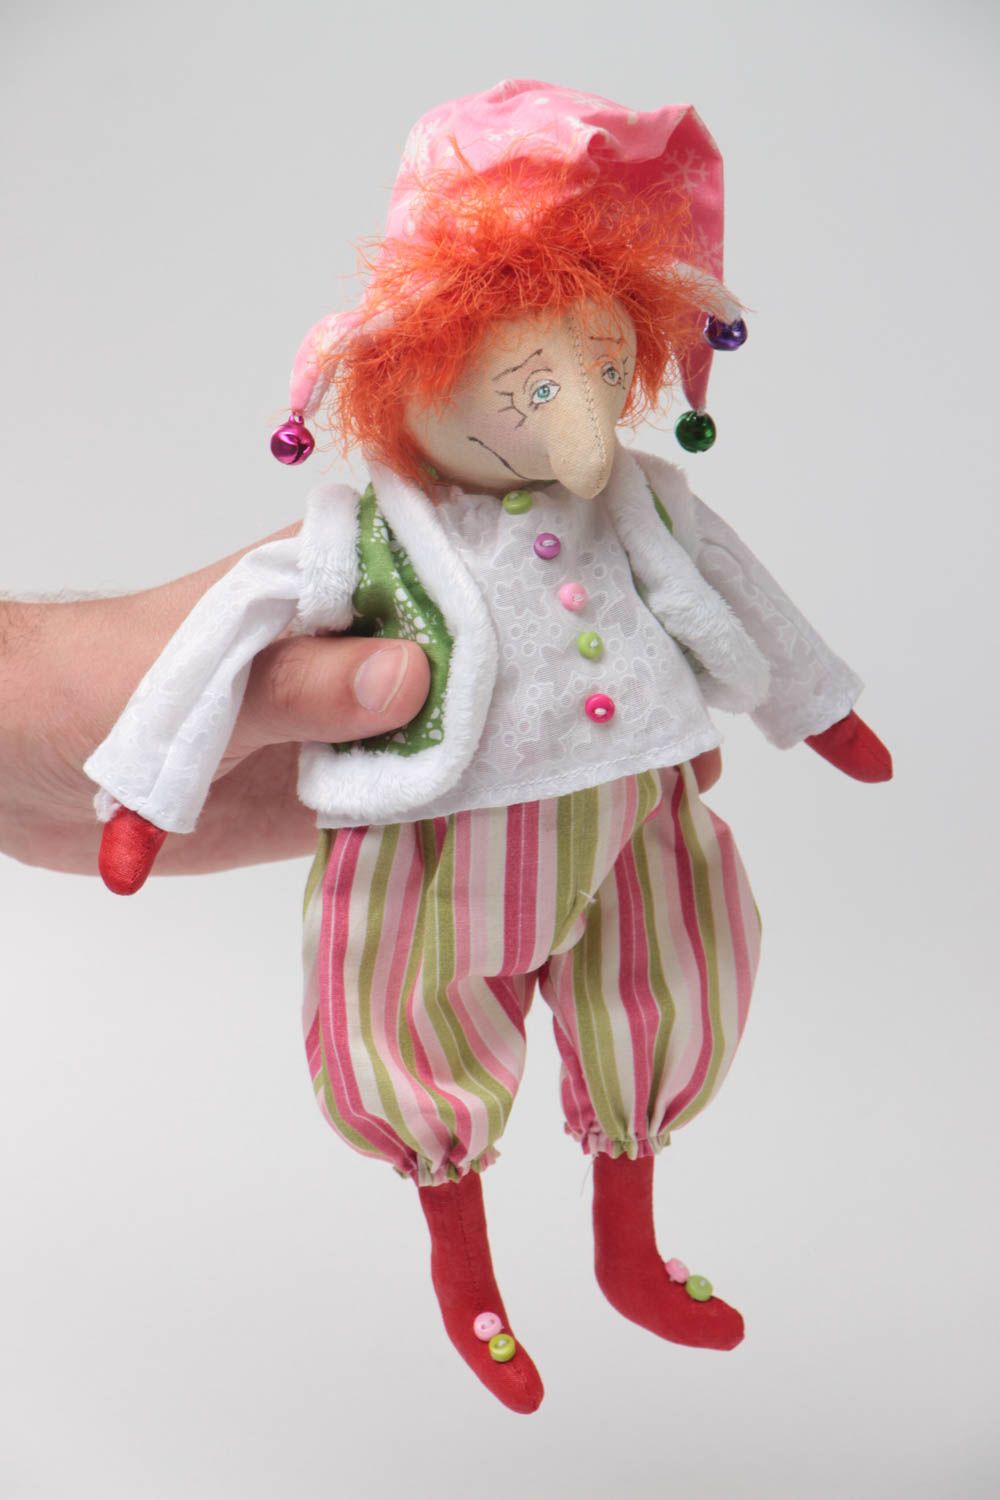 Handmade designer fabric soft toy in the shape of sad clown for interior decor photo 5